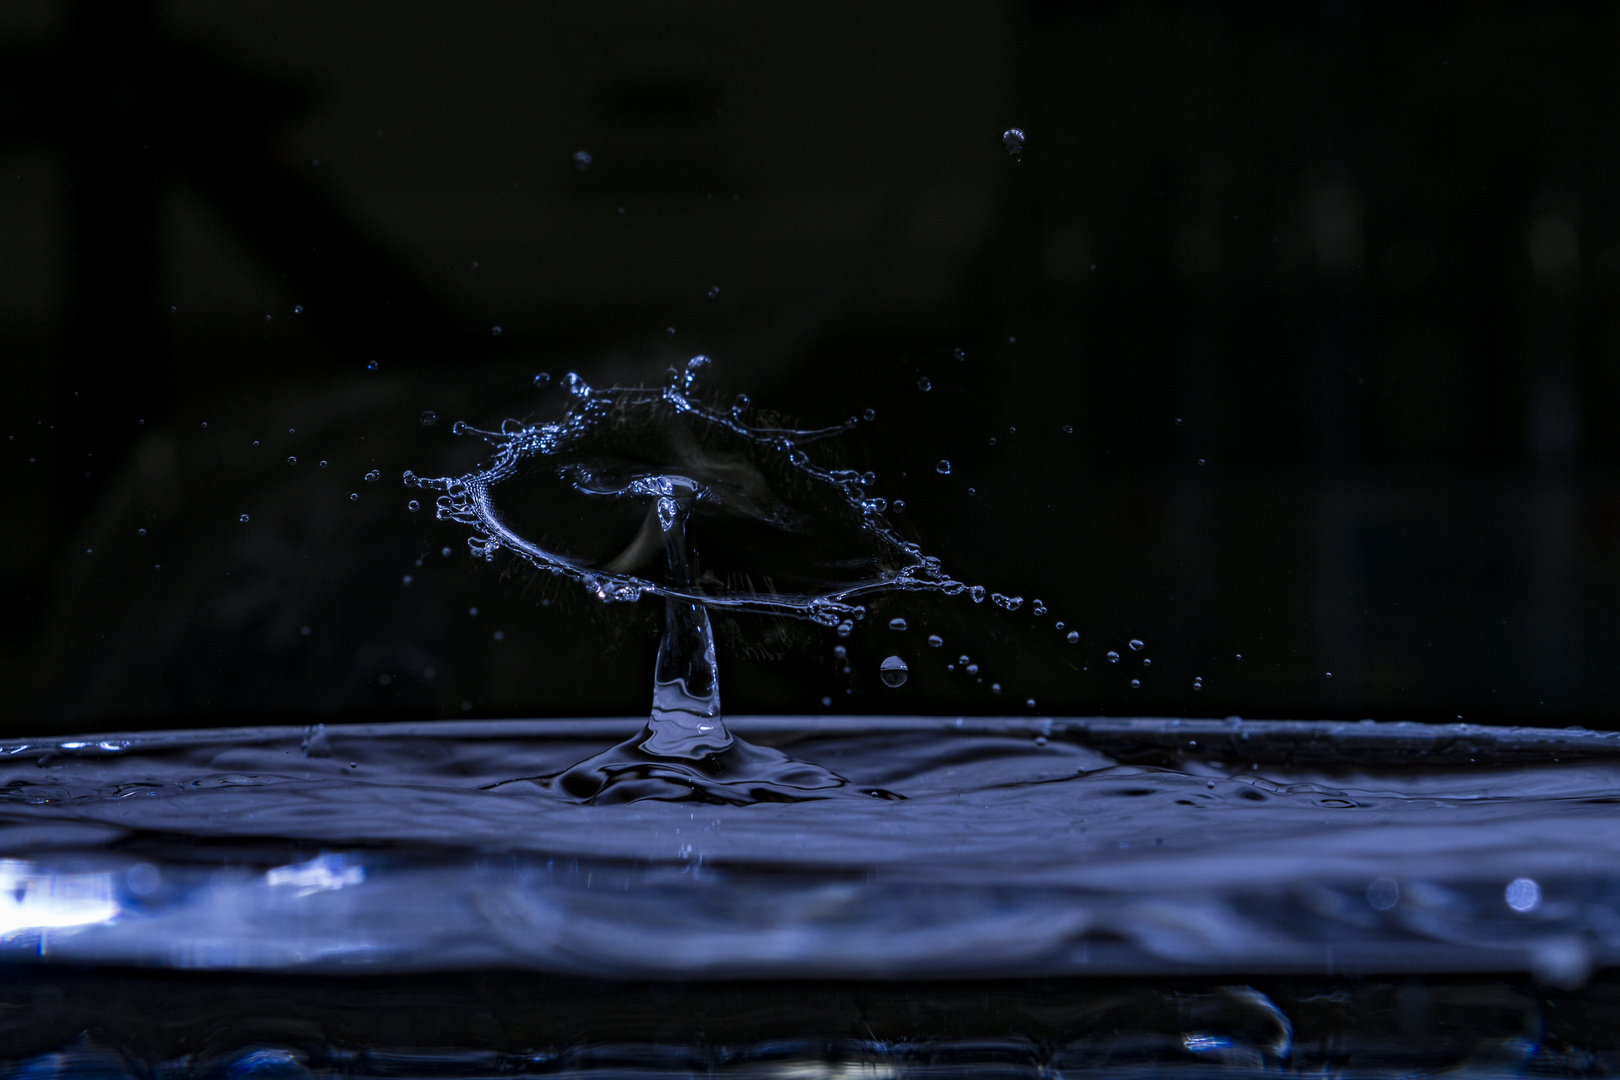 Drop-splash